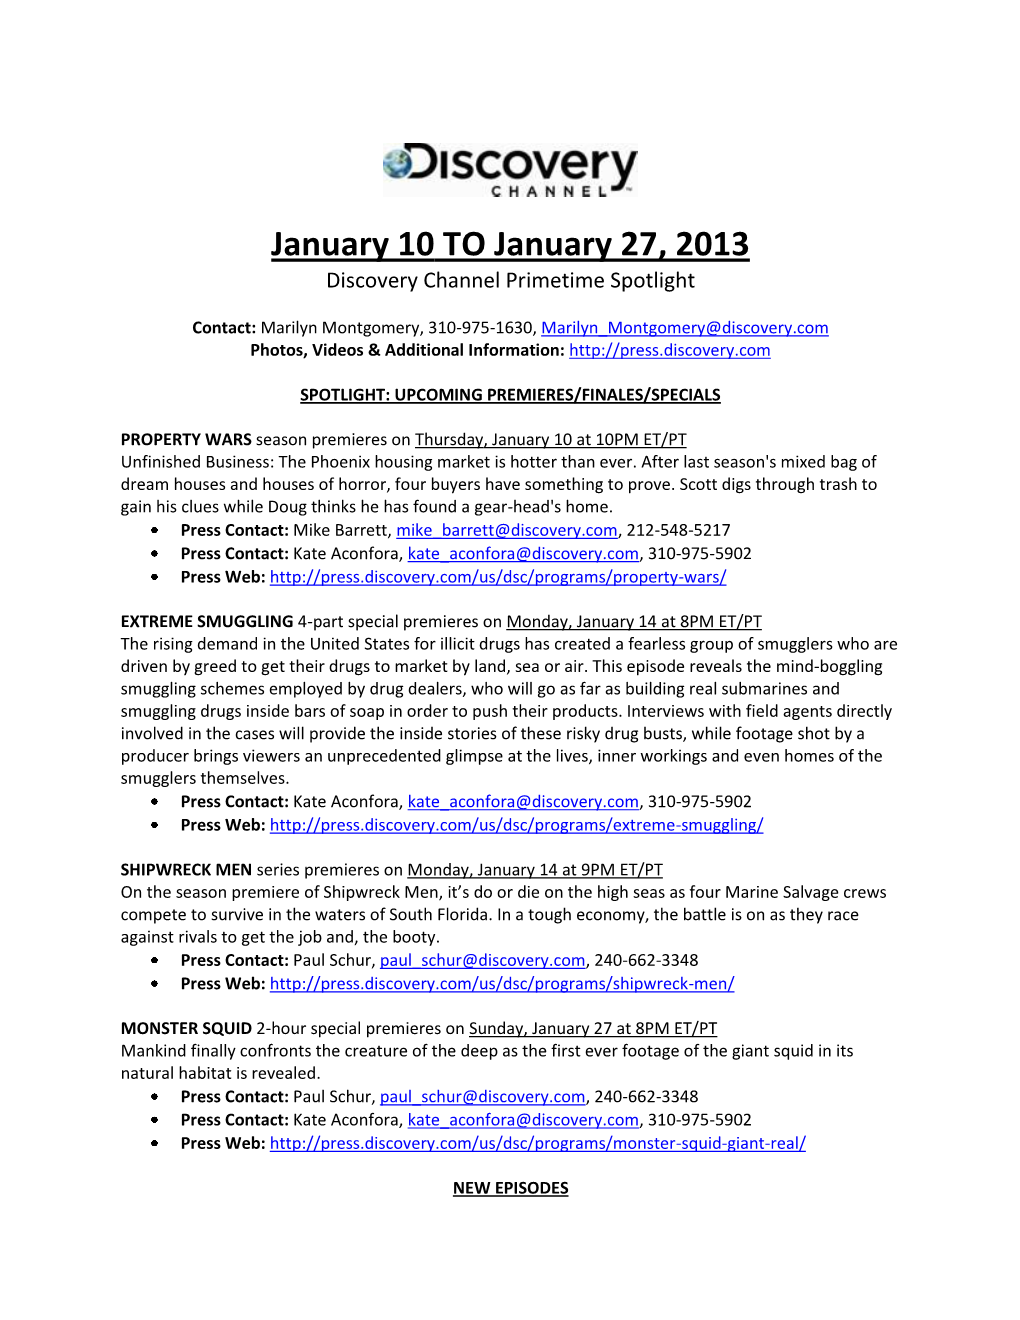 January 10 to January 27, 2013 Discovery Channel Primetime Spotlight